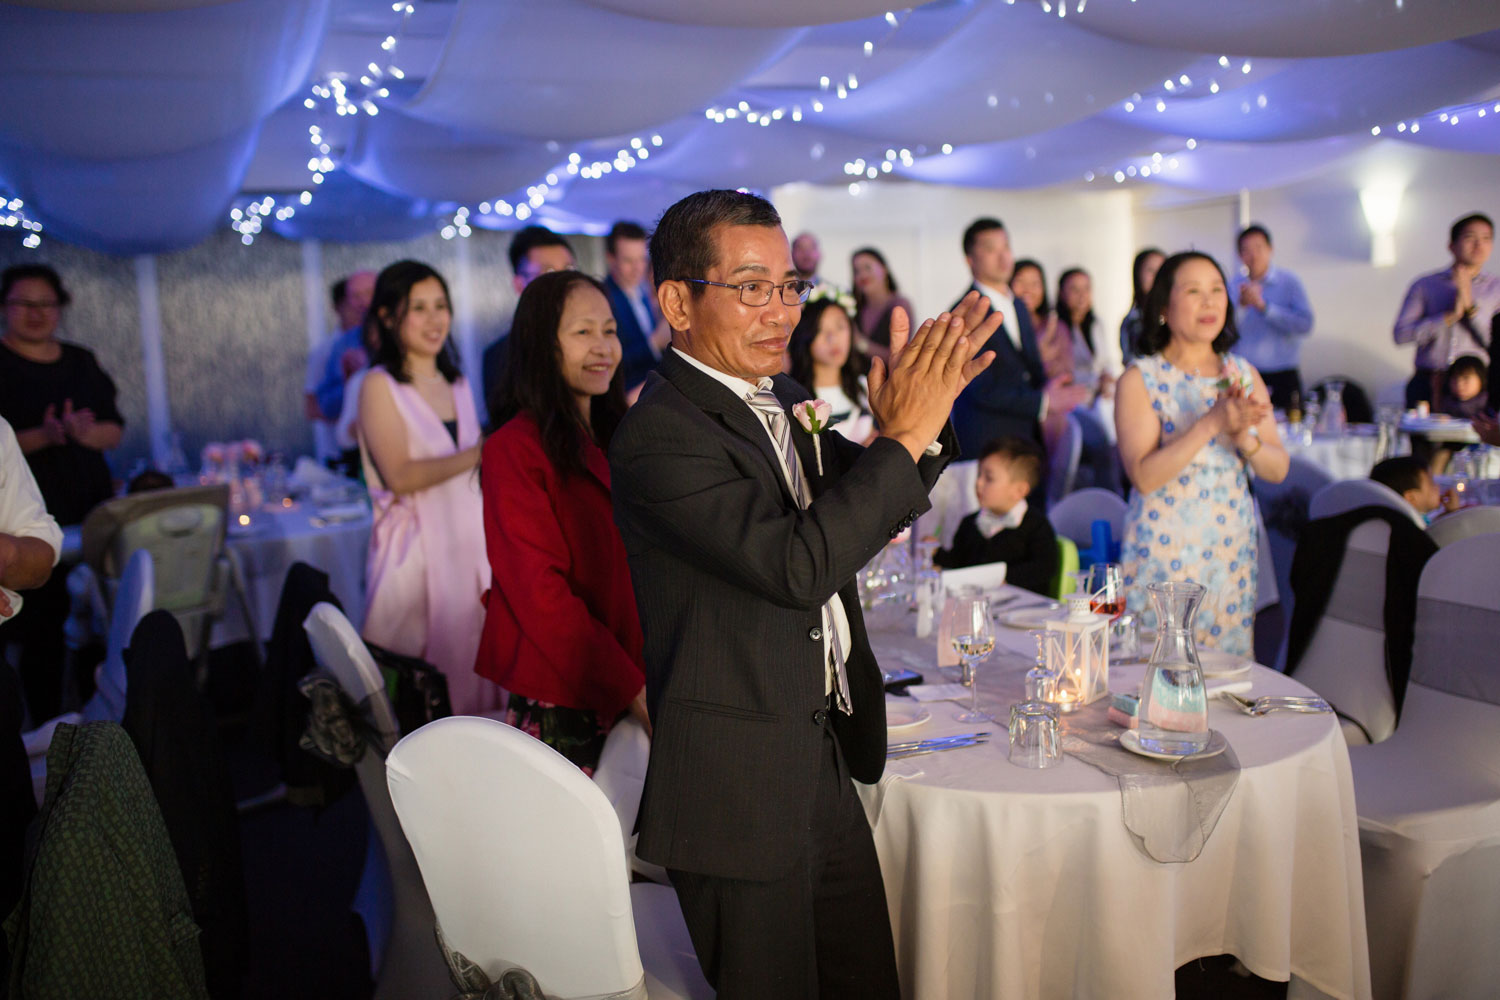 castaways waiuku wedding guests clapping hands